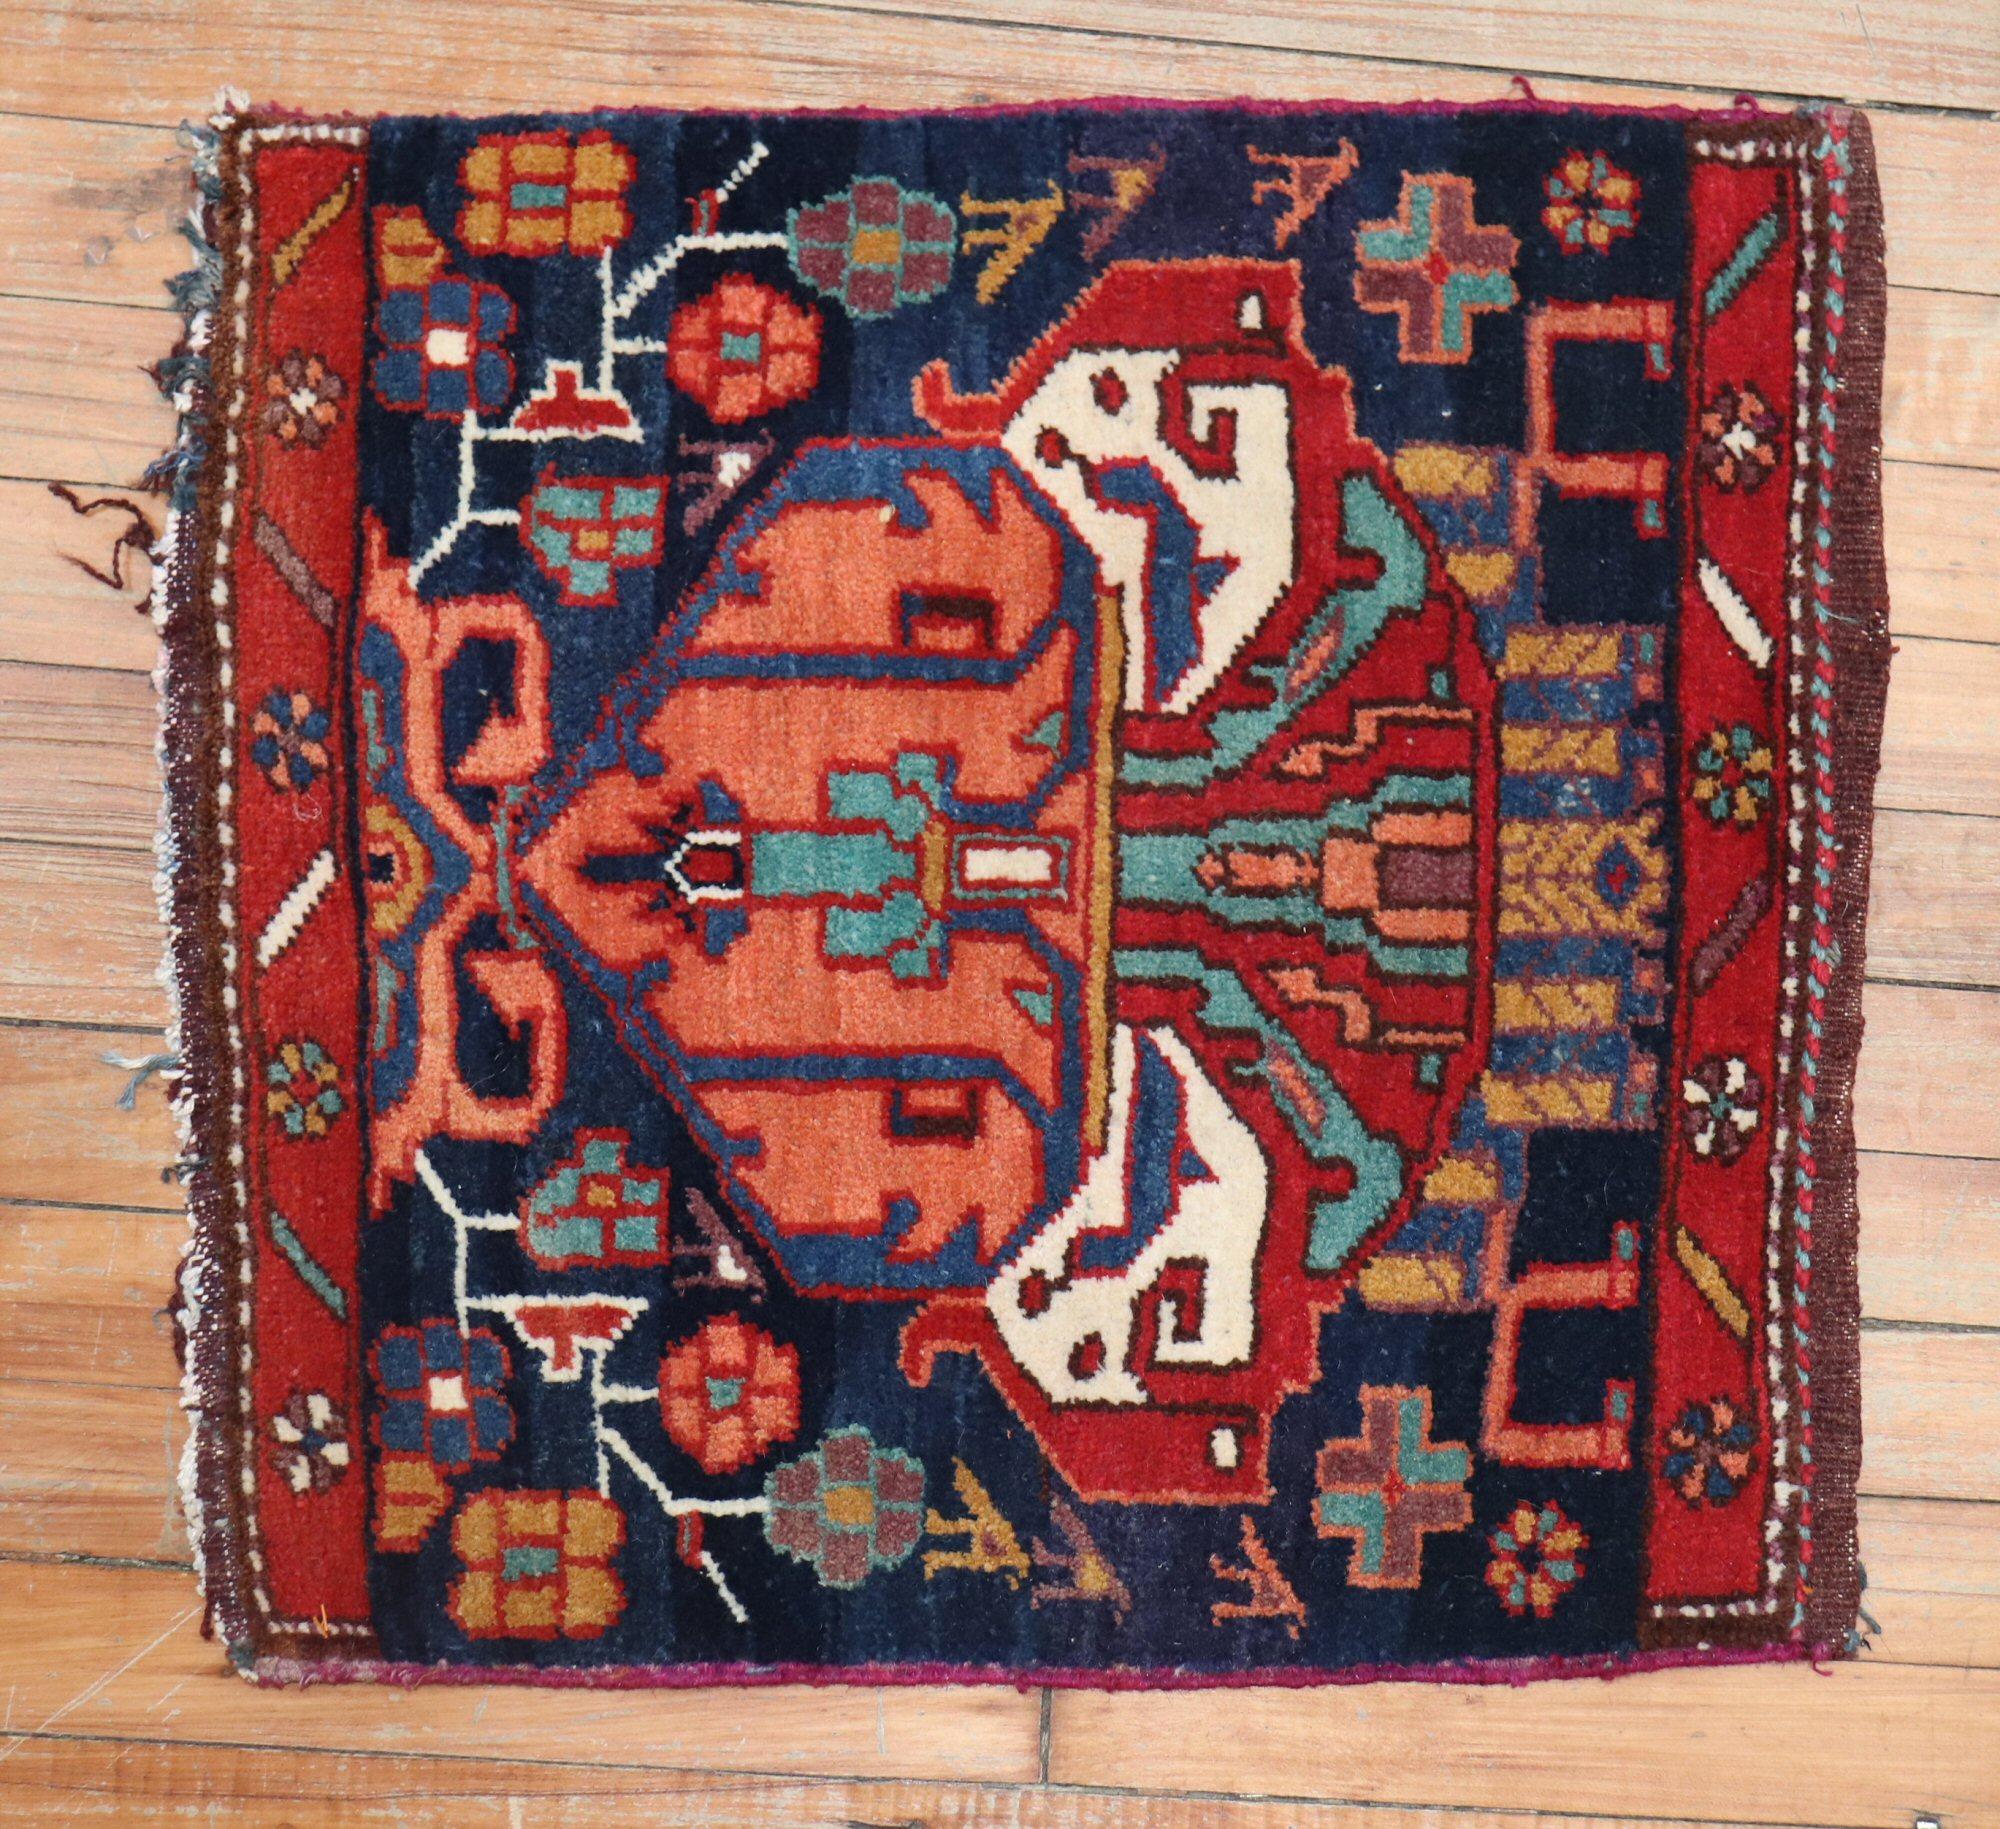 a2nd quarte of the 20th century Persian Bakhtiari Sampler Rug

Measures: 1'8'' x 1'10''.